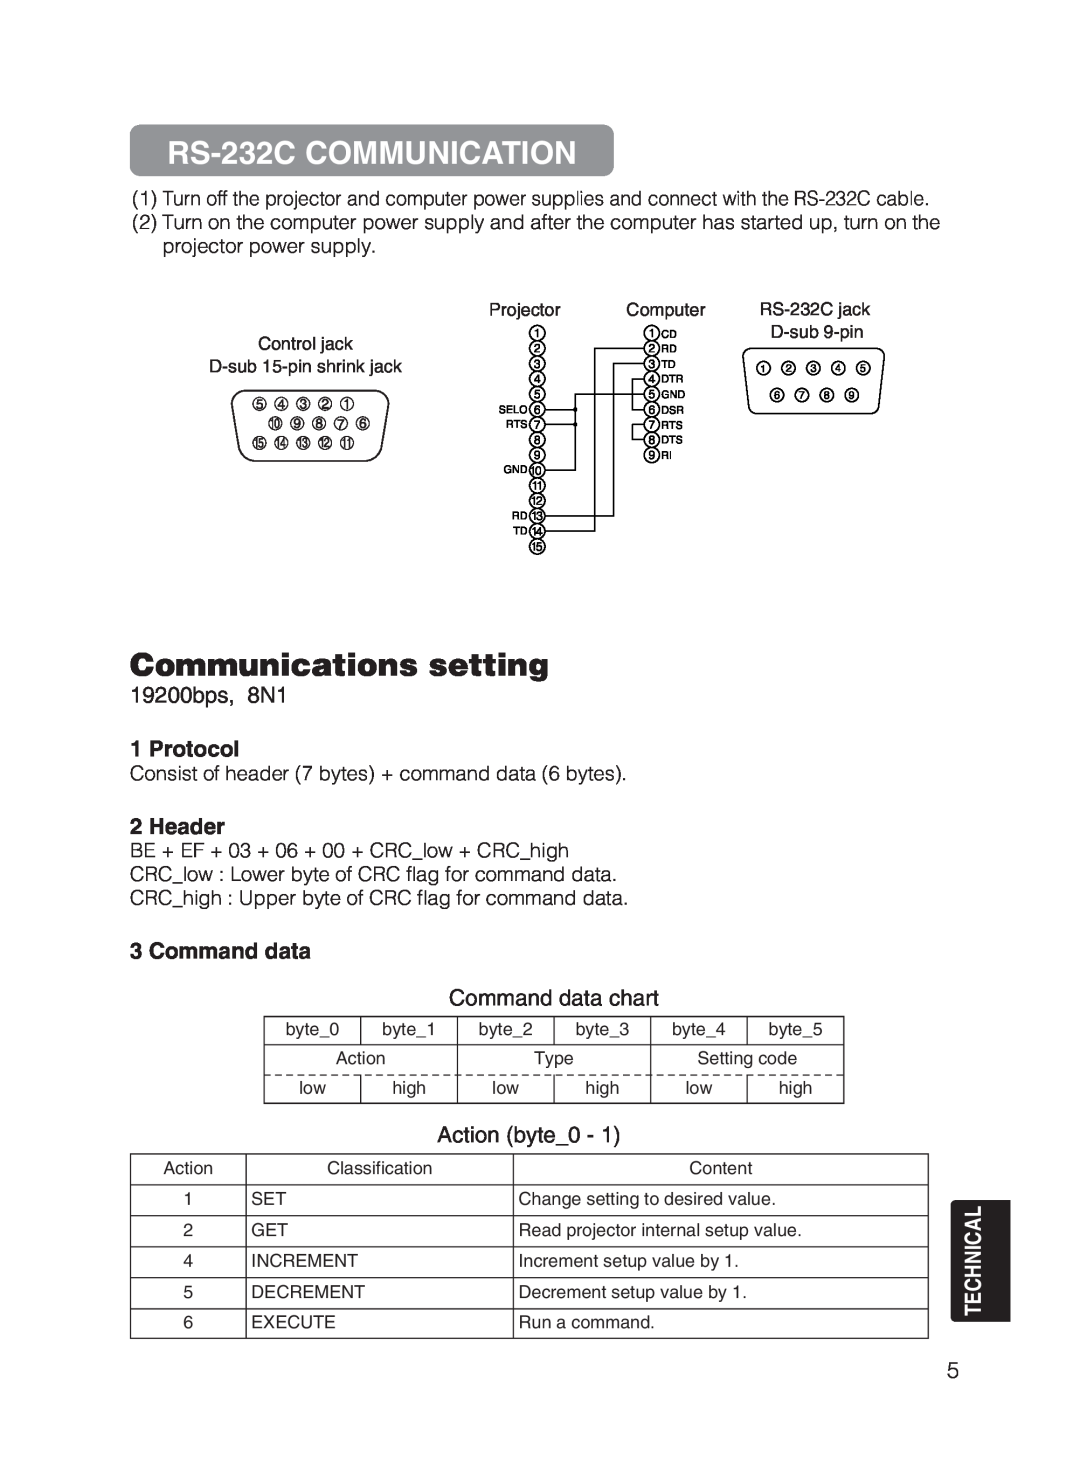 Dukane 8755B RS-232C COMMUNICATION, Communications setting, 162738495, 19200bps, 8N1, Protocol, Header, Command data 